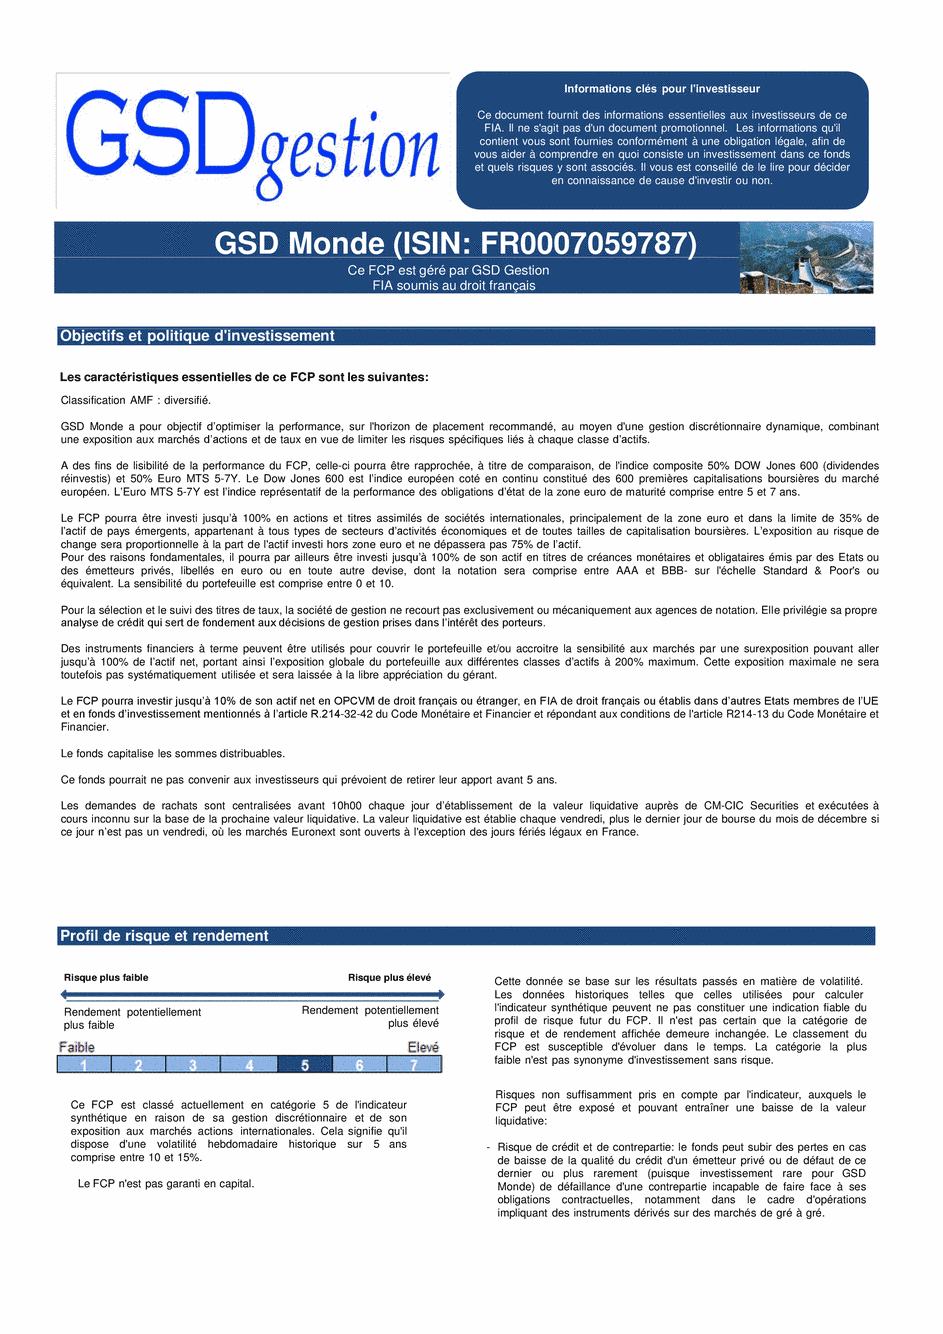 DICI-Prospectus GSD Monde - 06/02/2015 - Français